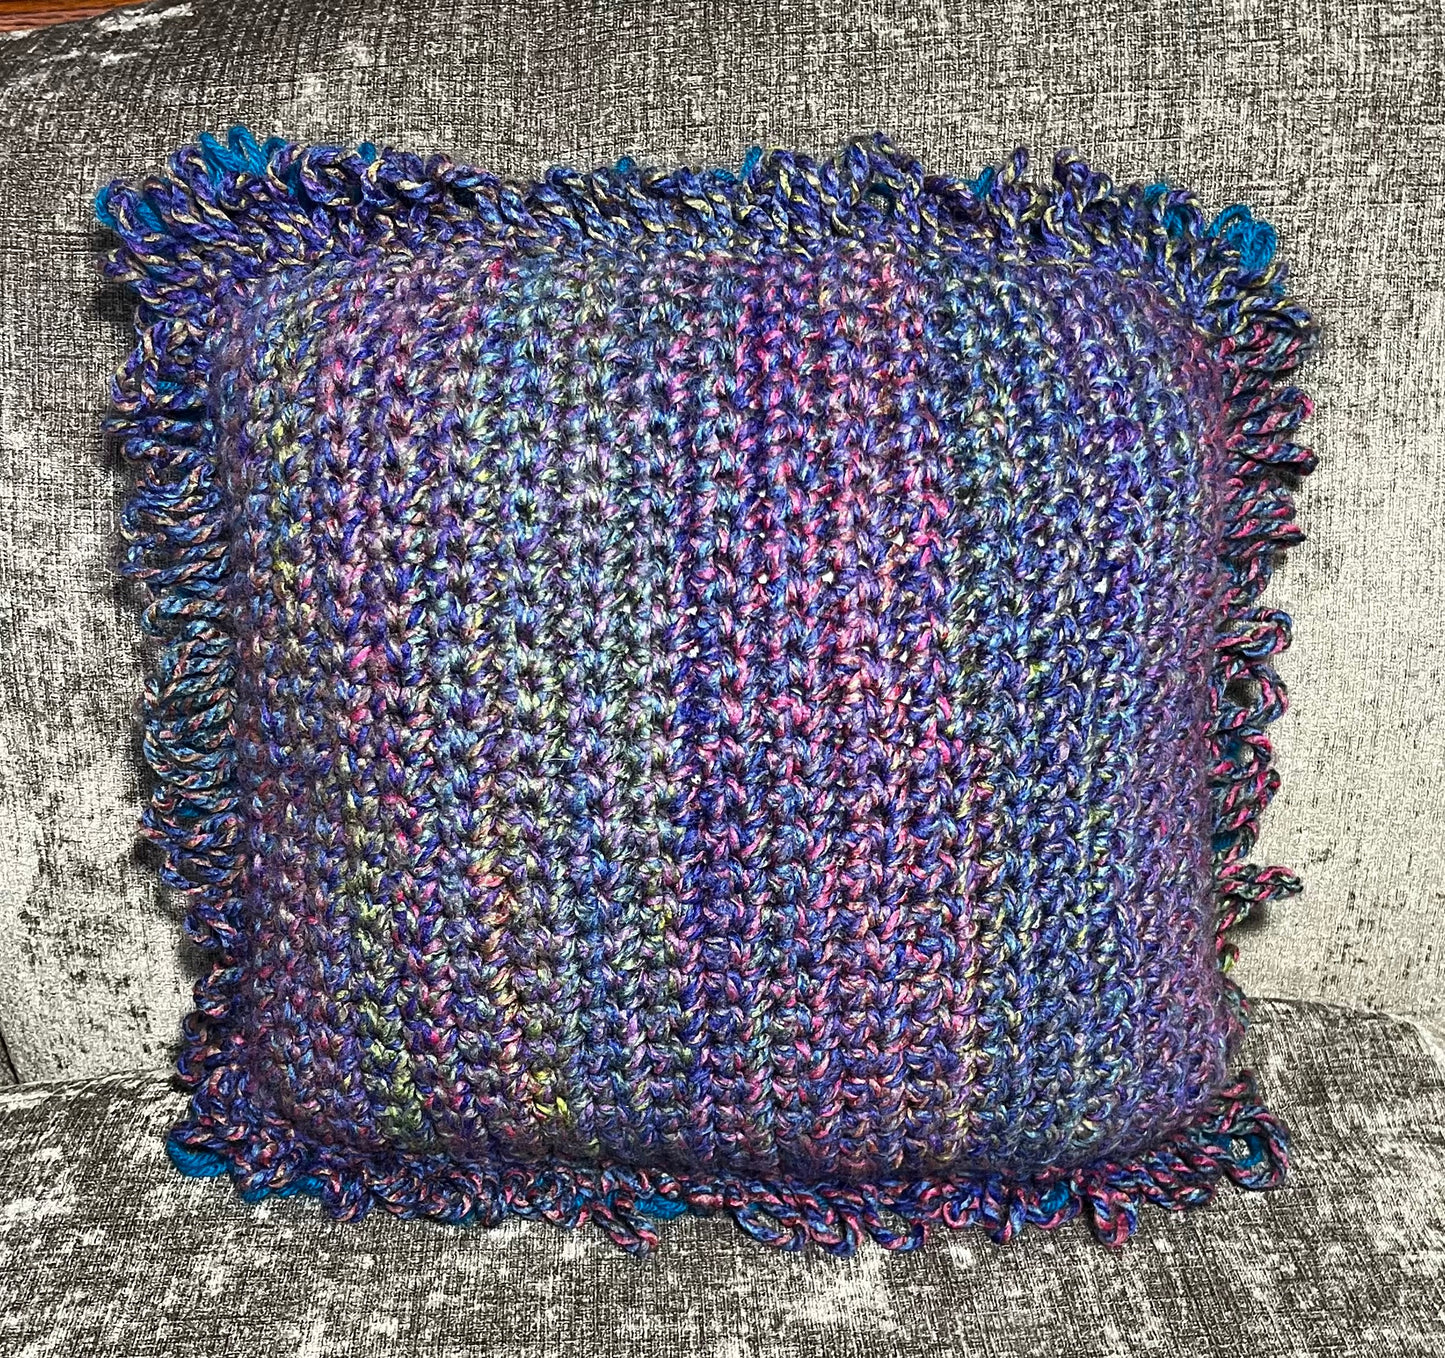 "Choose Your Own Adventure!" Handmade Crochet/Knit Decorative Statement Throw Pillow